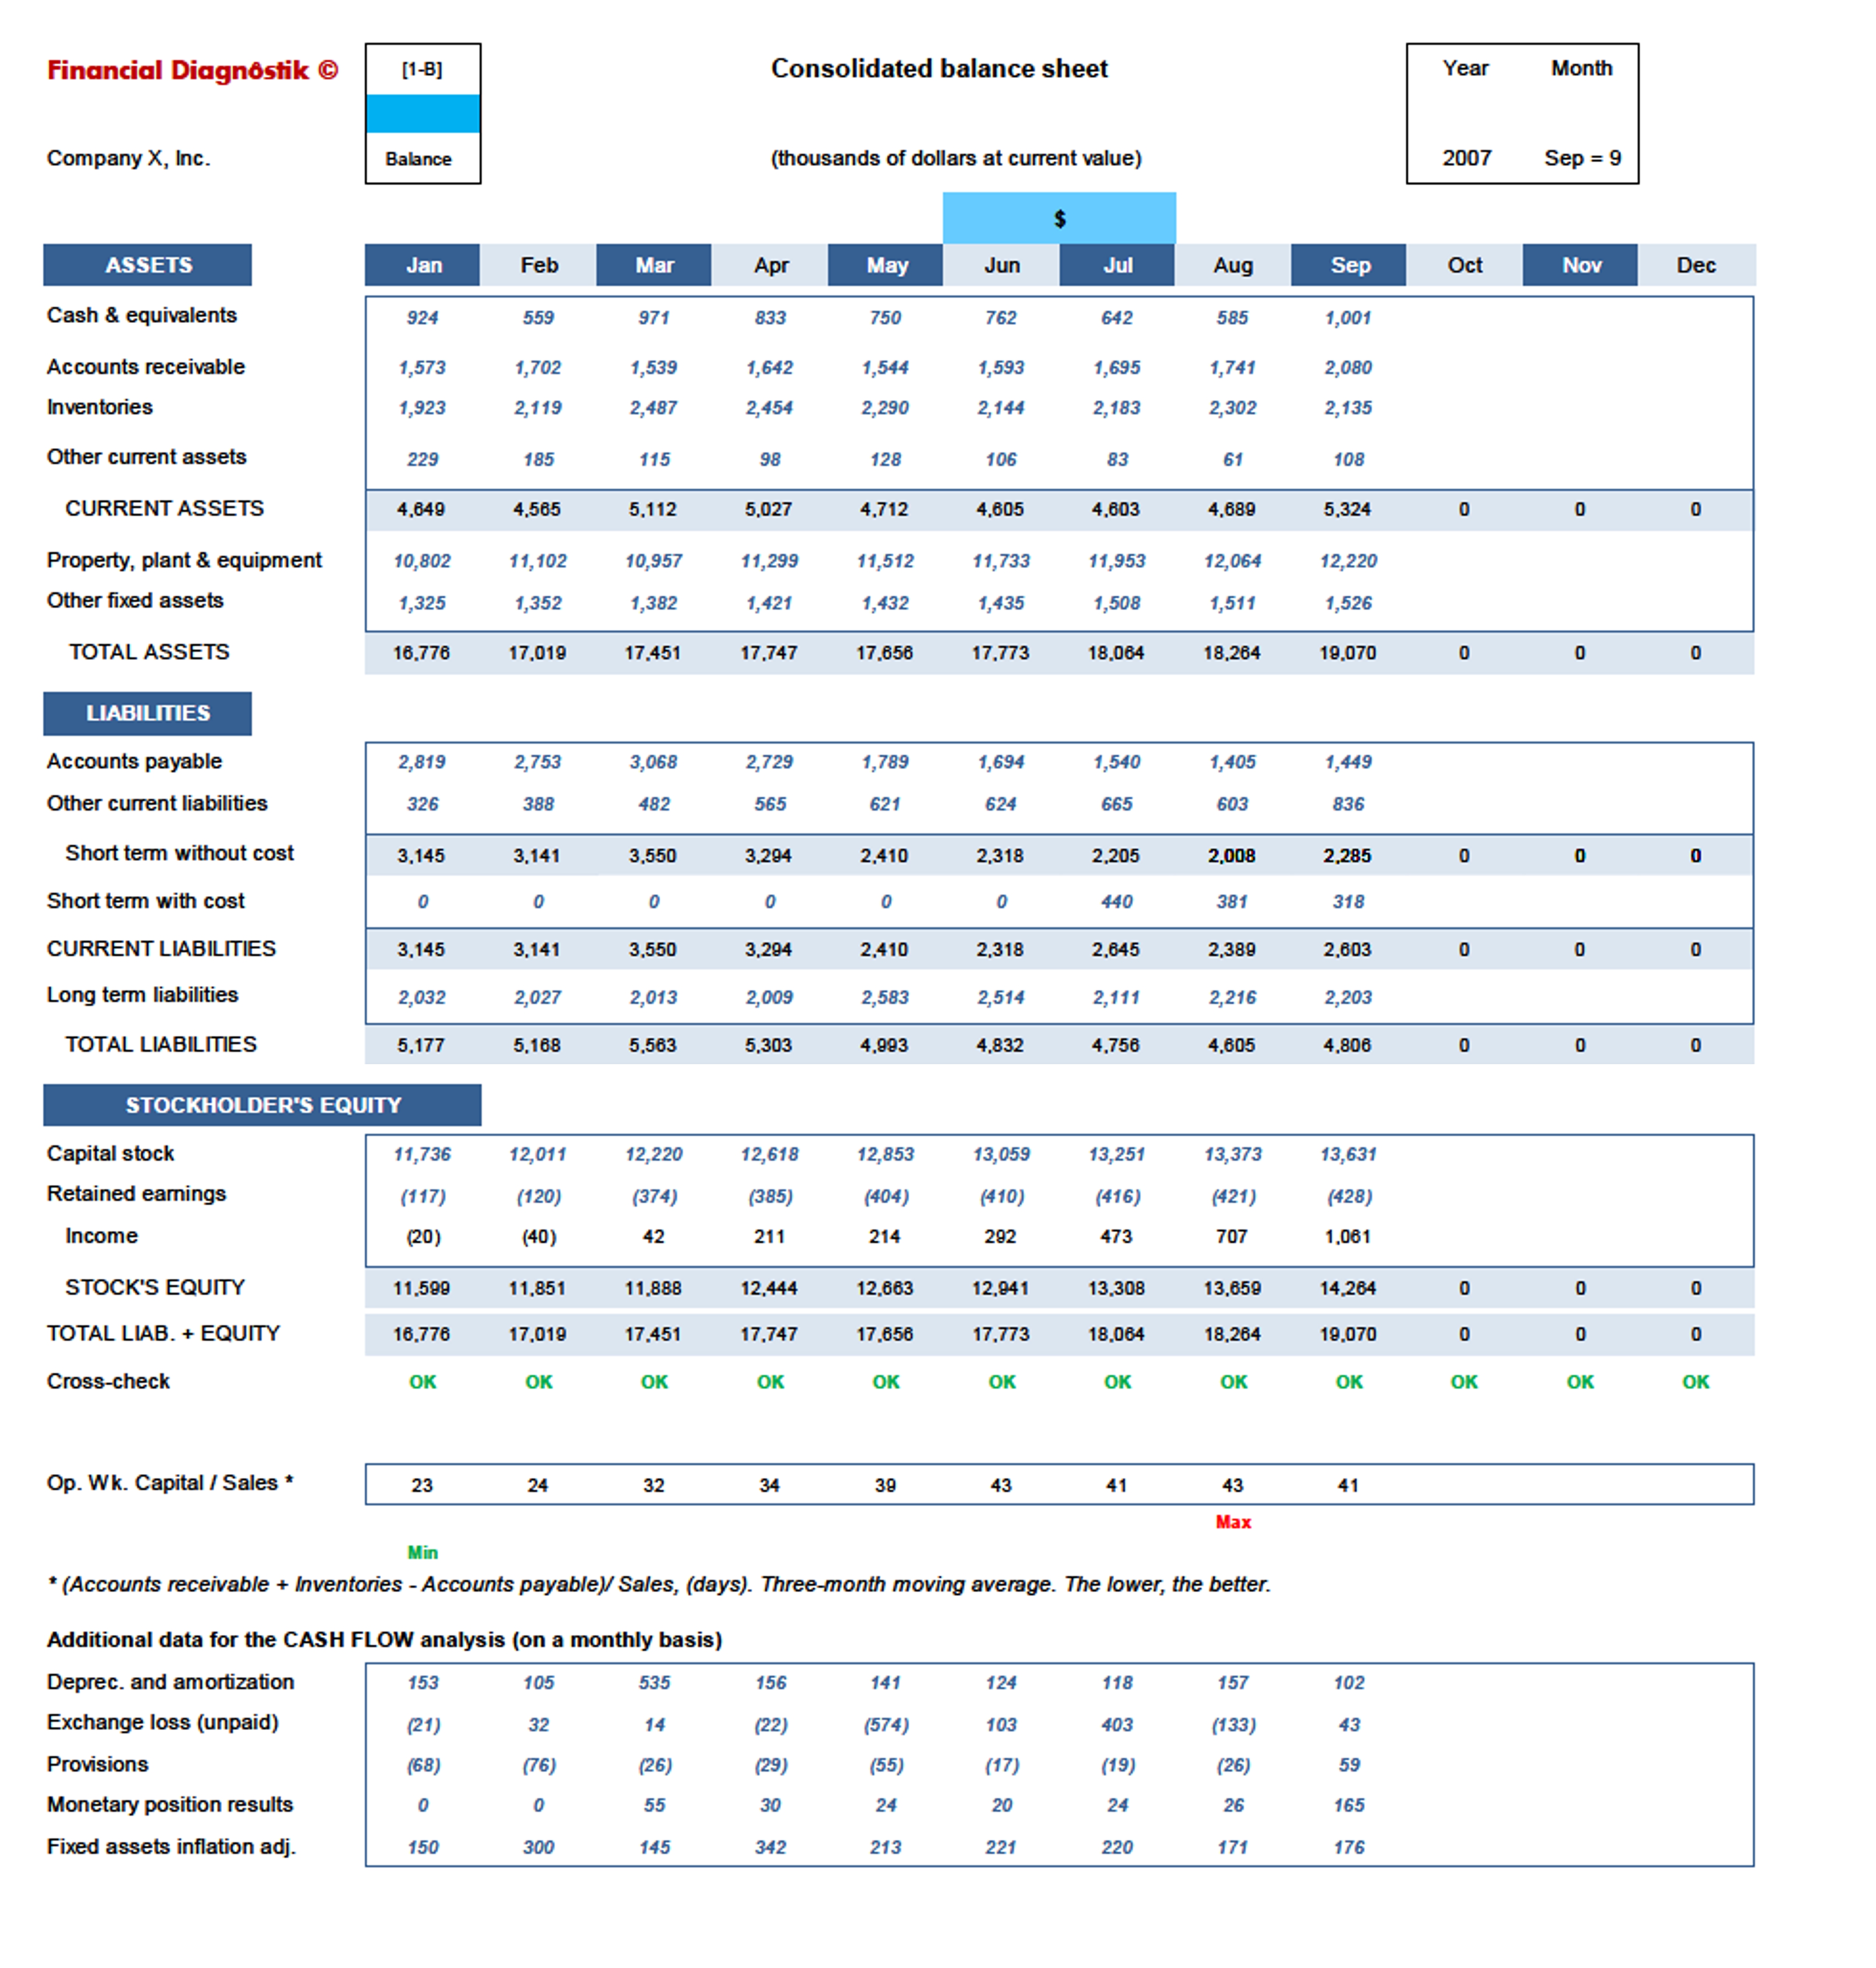 Financial Diagnôstik© — Balance sheet